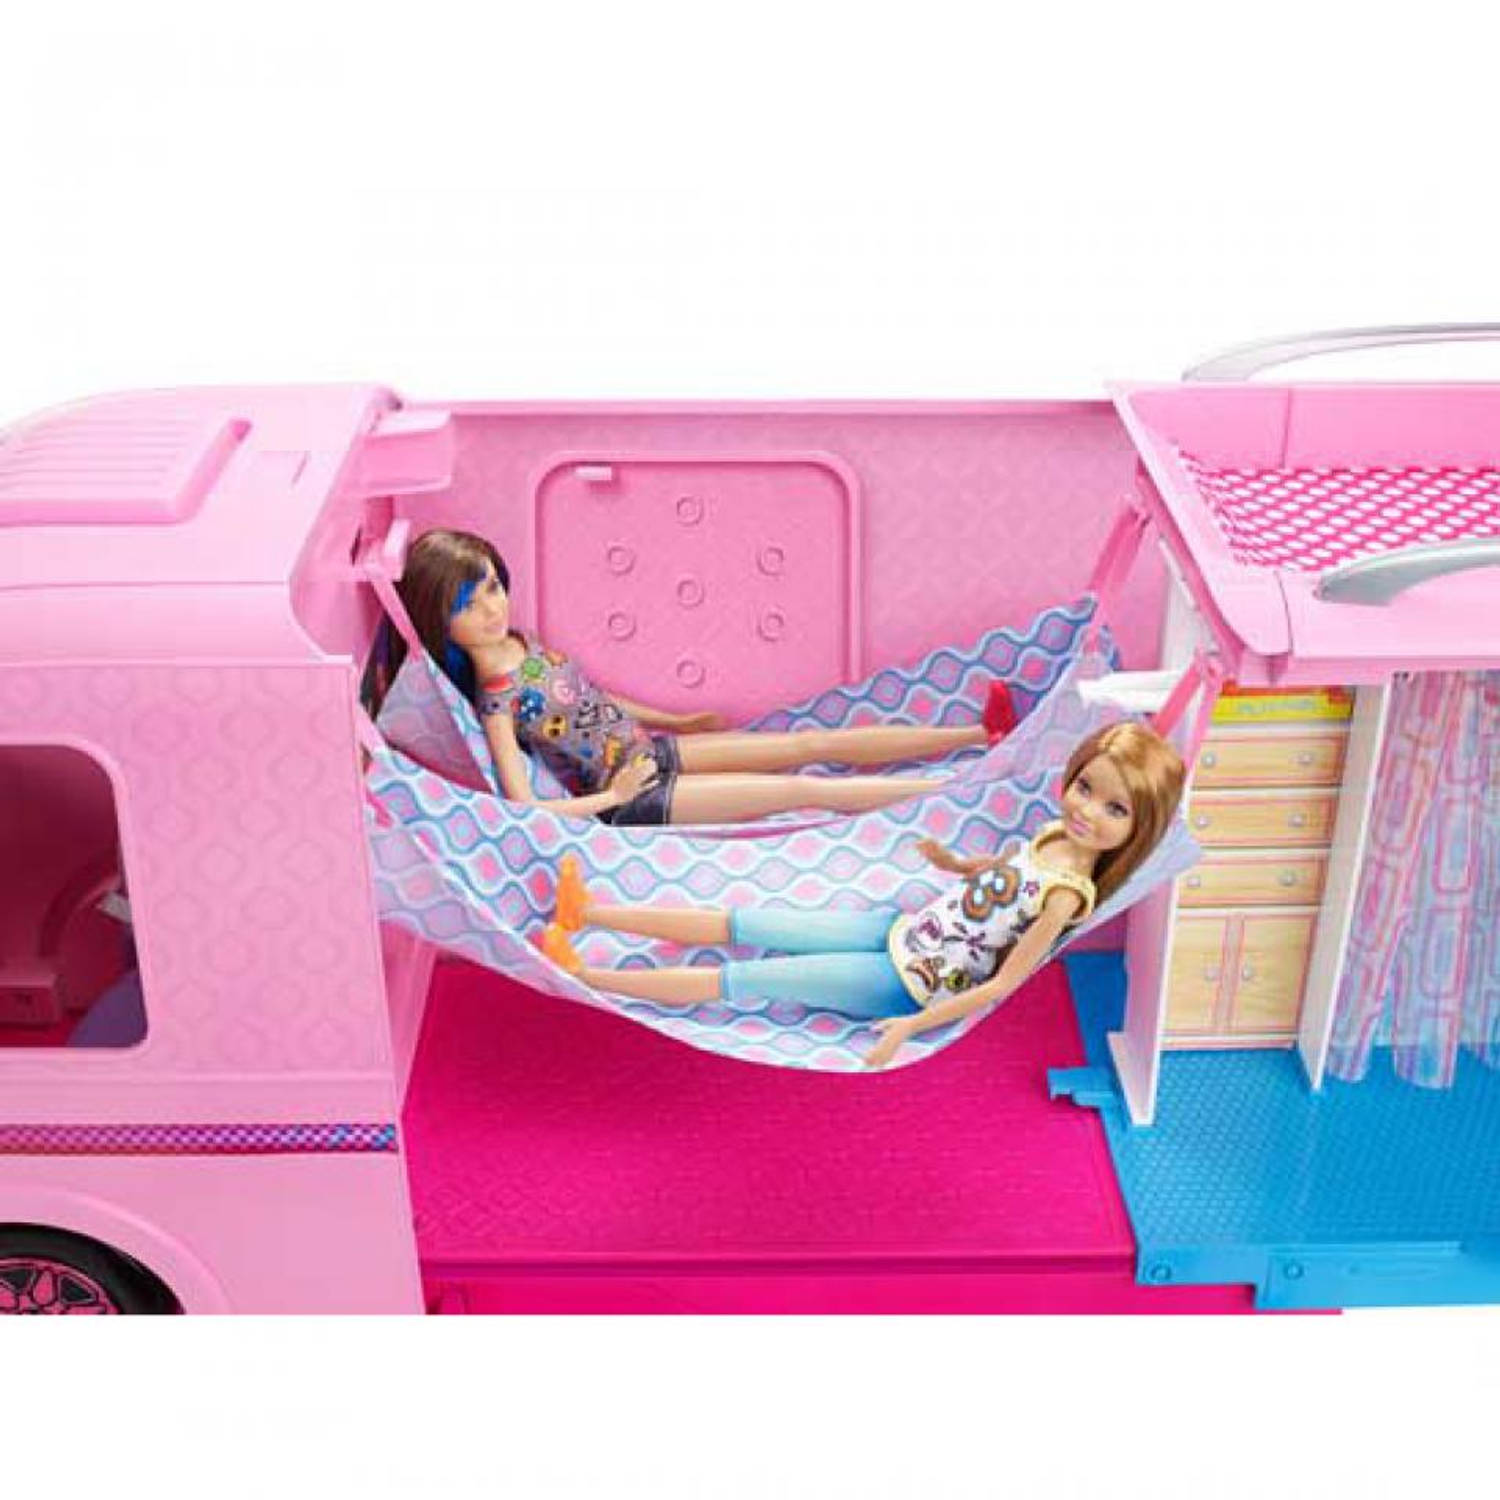 Flash vastleggen vermoeidheid Barbie Droomcamper speelset - roze | Blokker